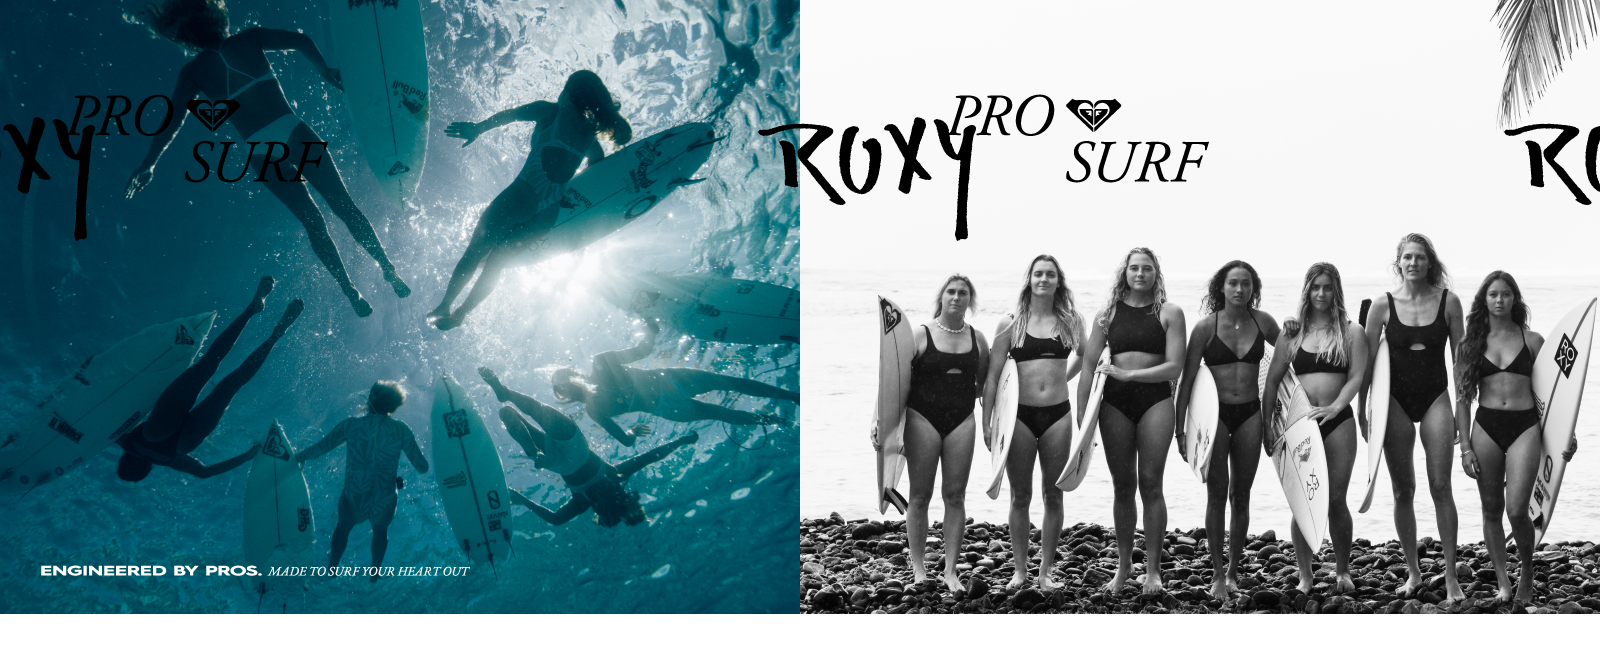 ROXY PRO SURF